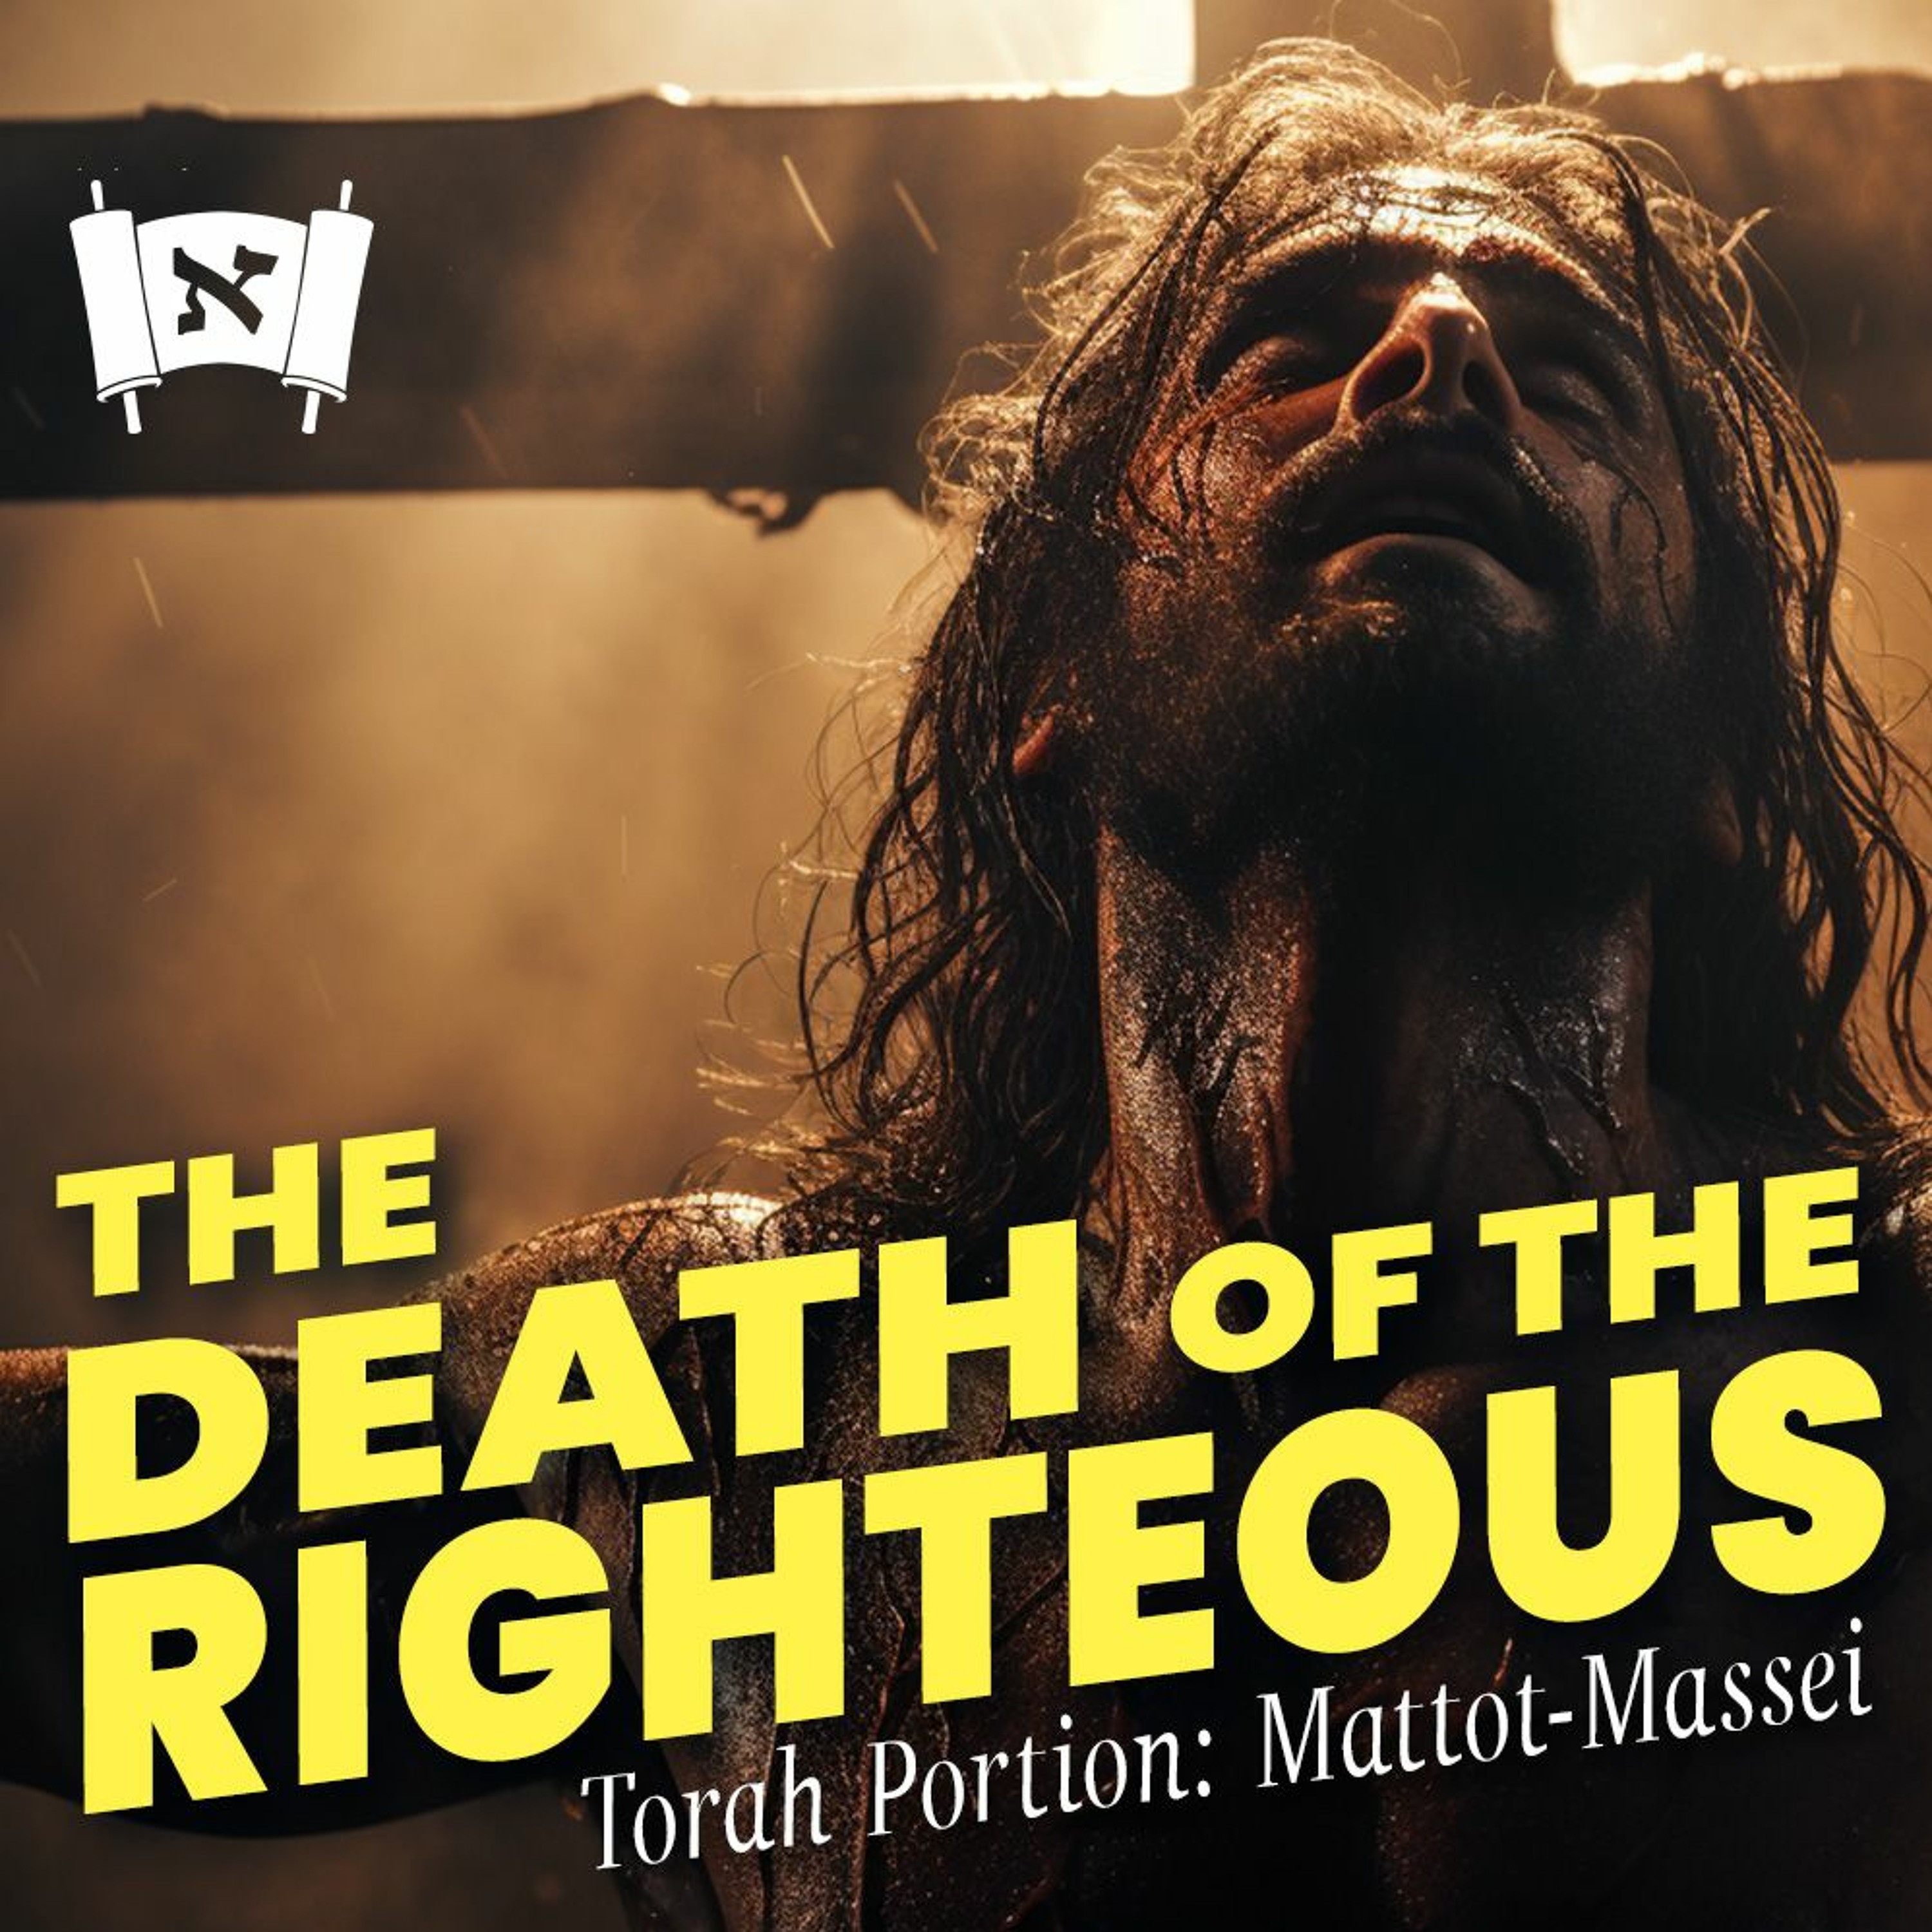 Mattot-Massei | The Death of the Righteous